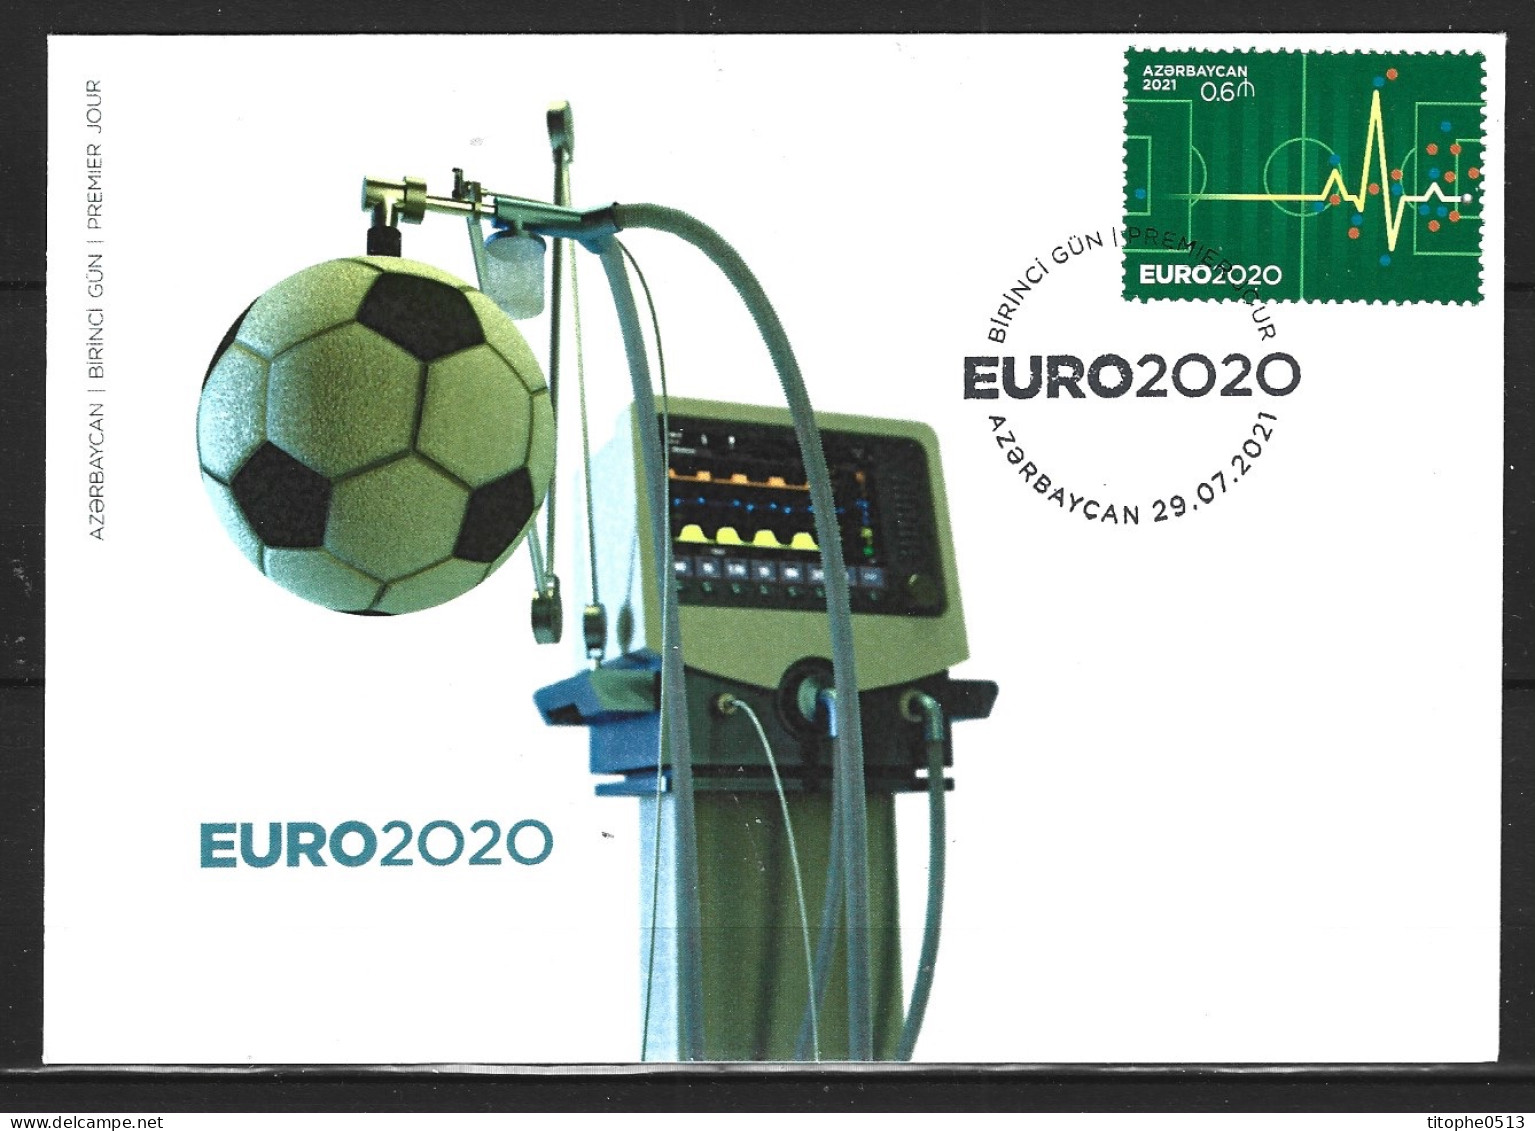 AZERBAIDJAN. Timbre De 2021 Sur Enveloppe 1er Jour. Euro 2020. - Europees Kampioenschap (UEFA)